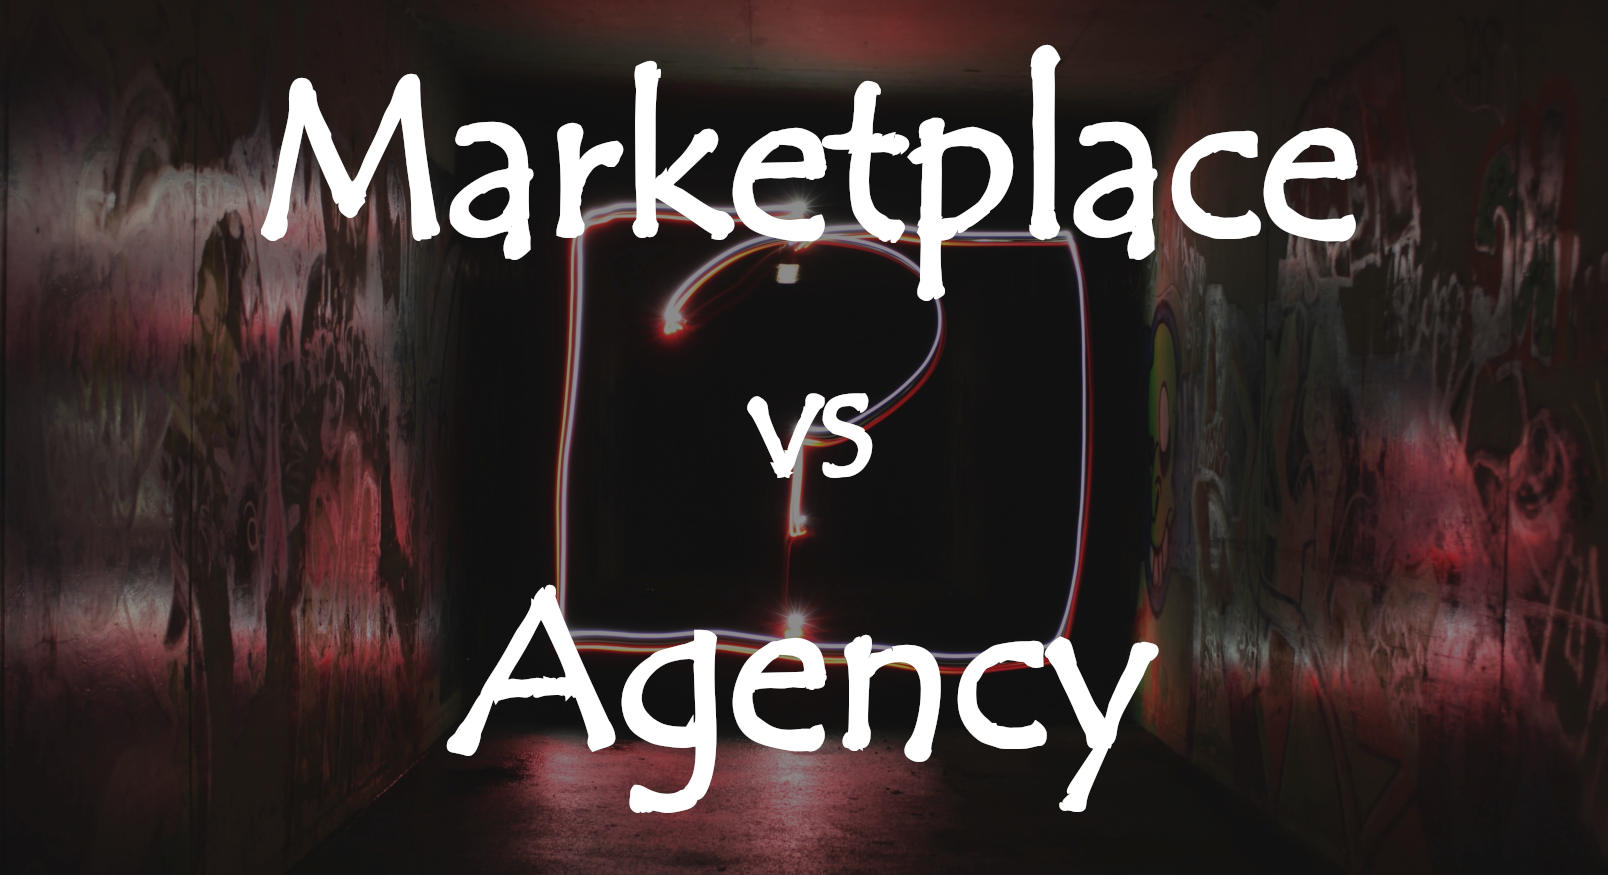 Marketplace vs Agency